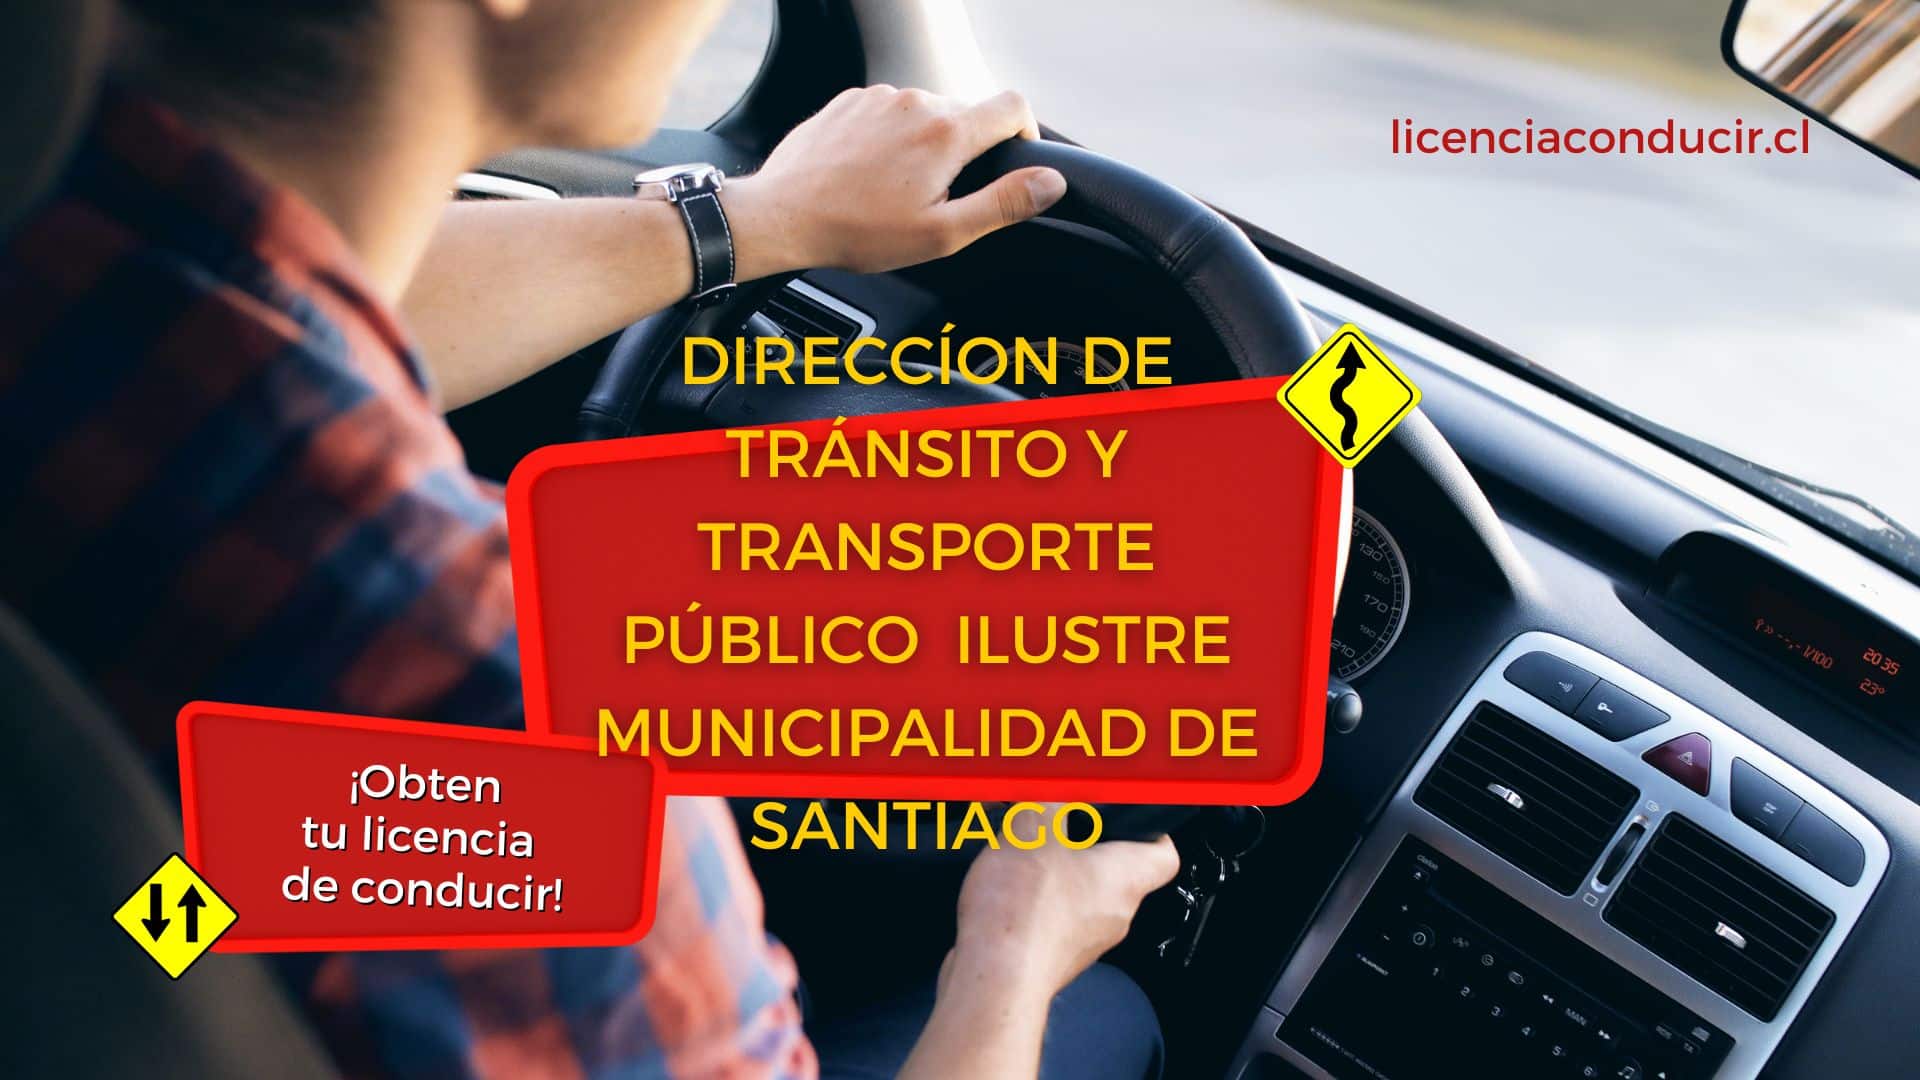 Renovar licencia conducir en santiago